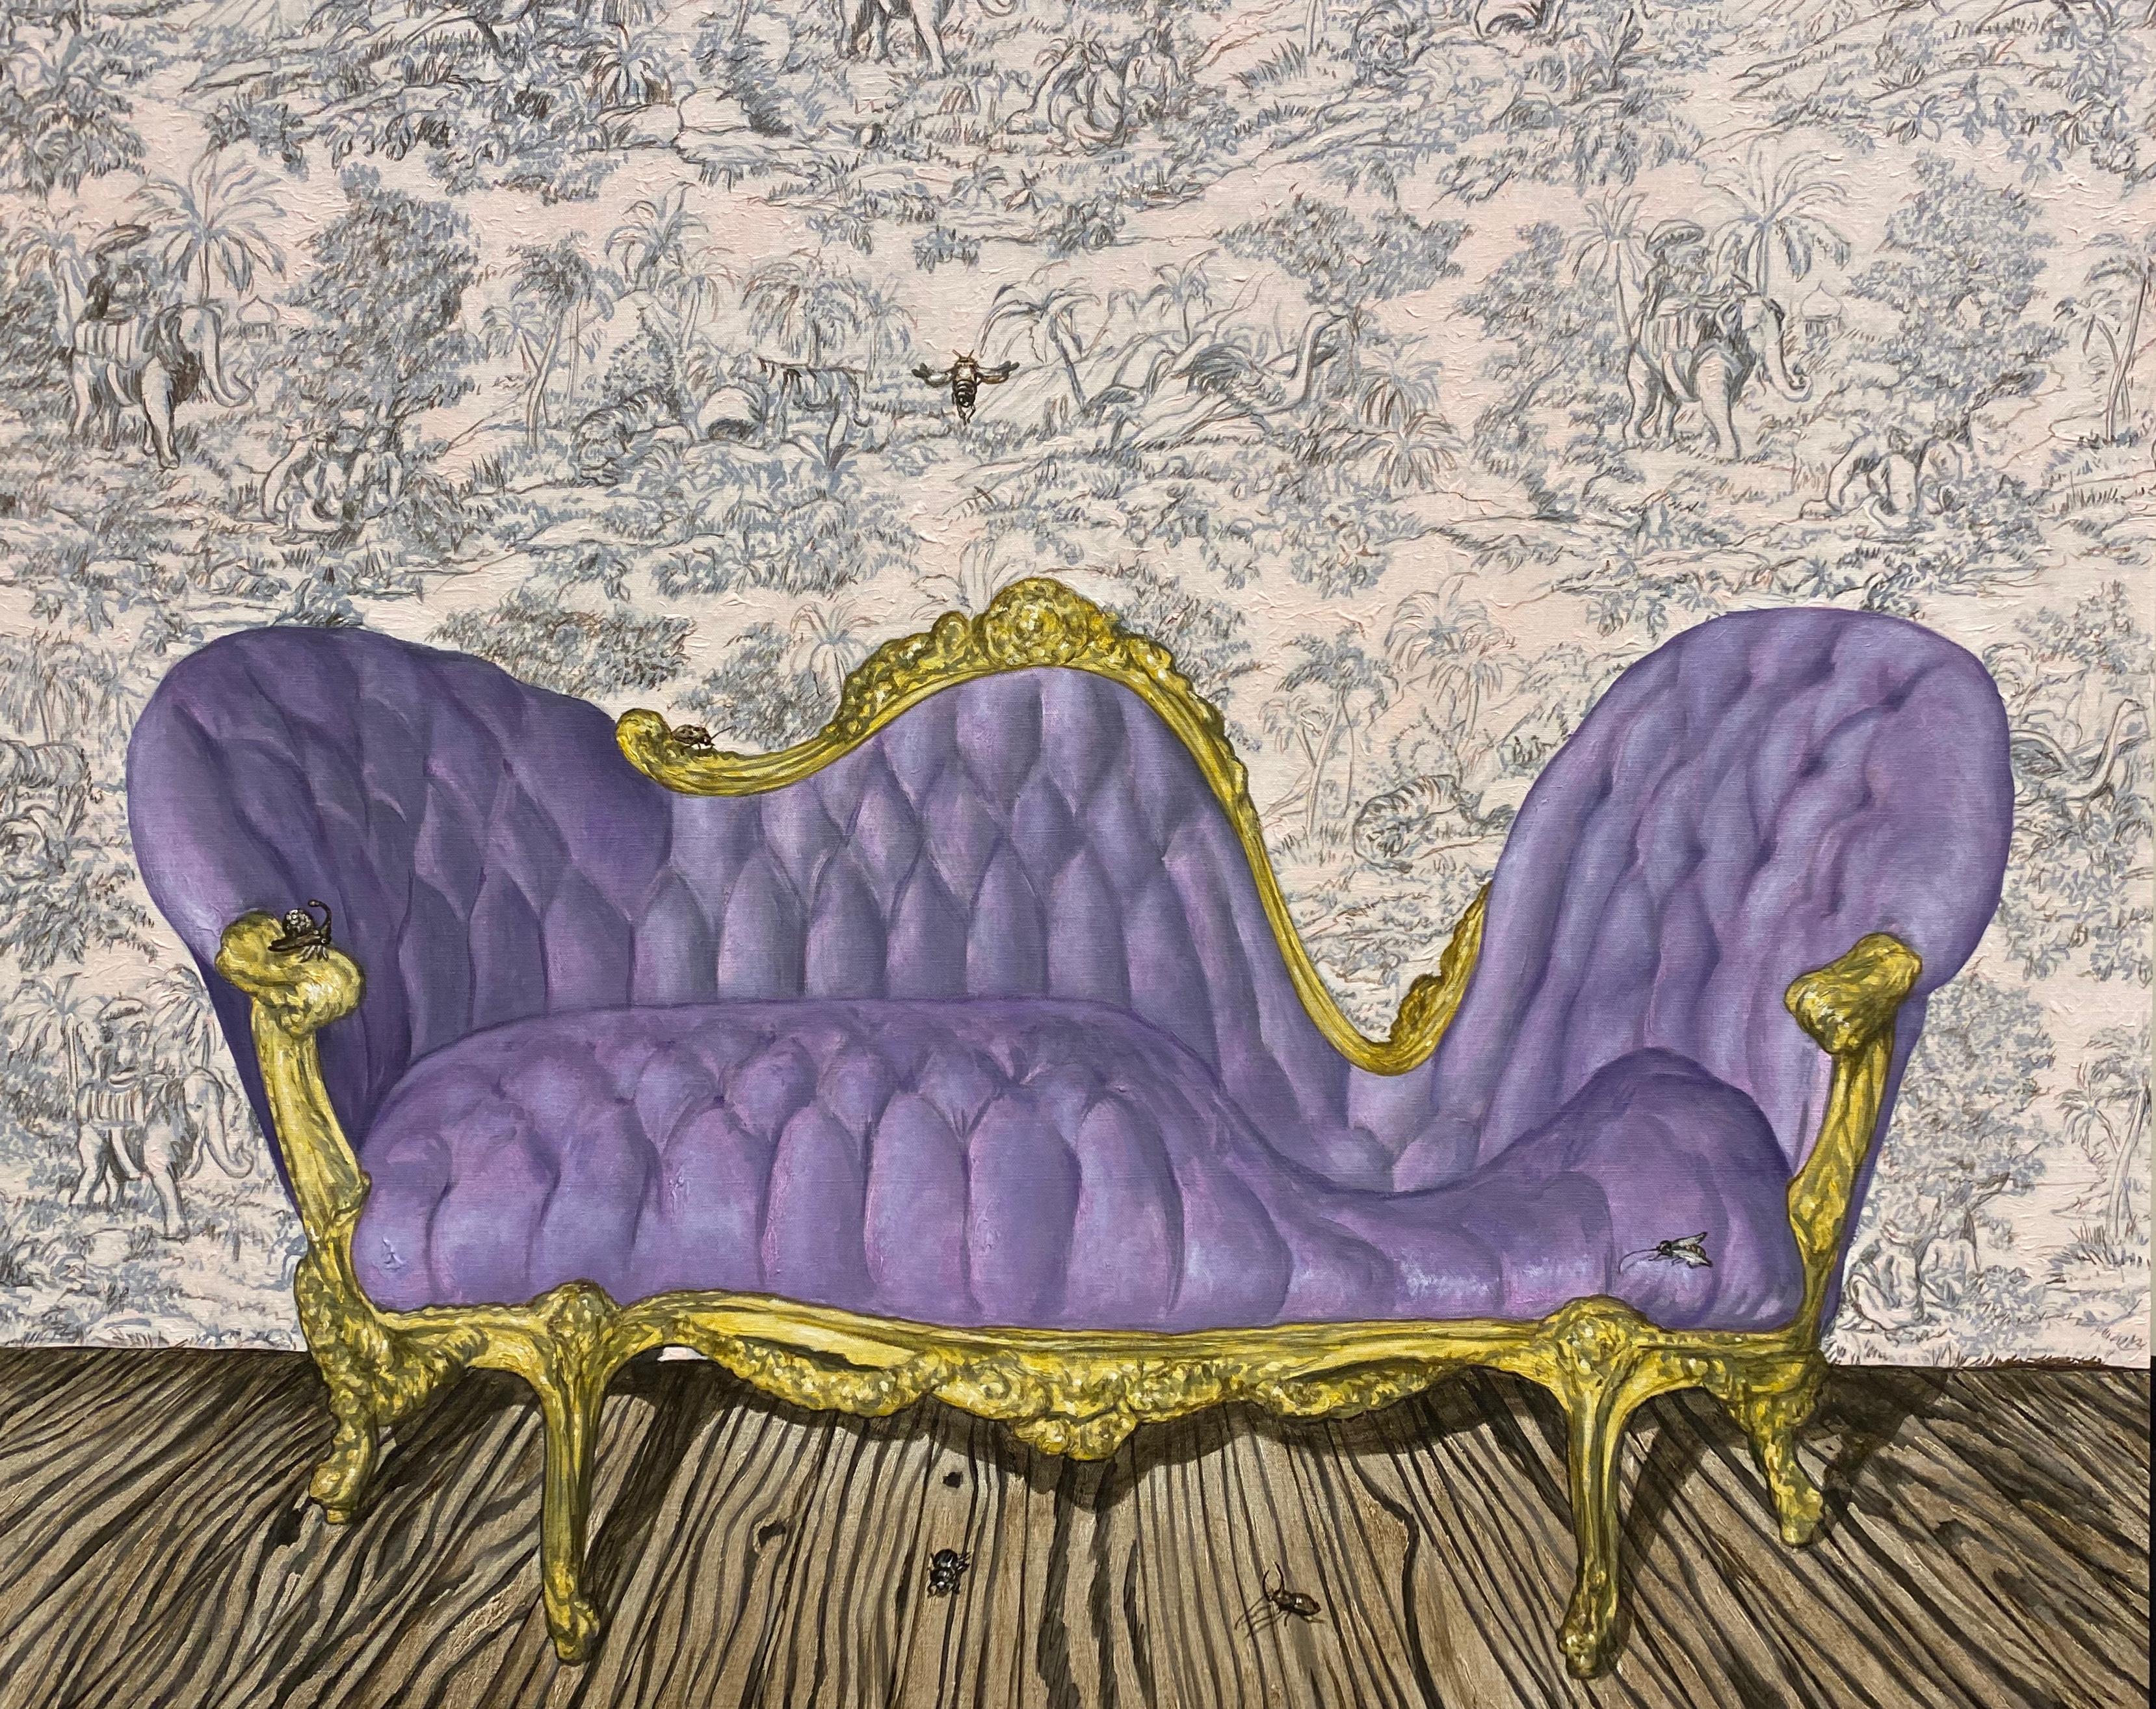 Lavender Furniture - Painting by Carlos Gamez De Francisco